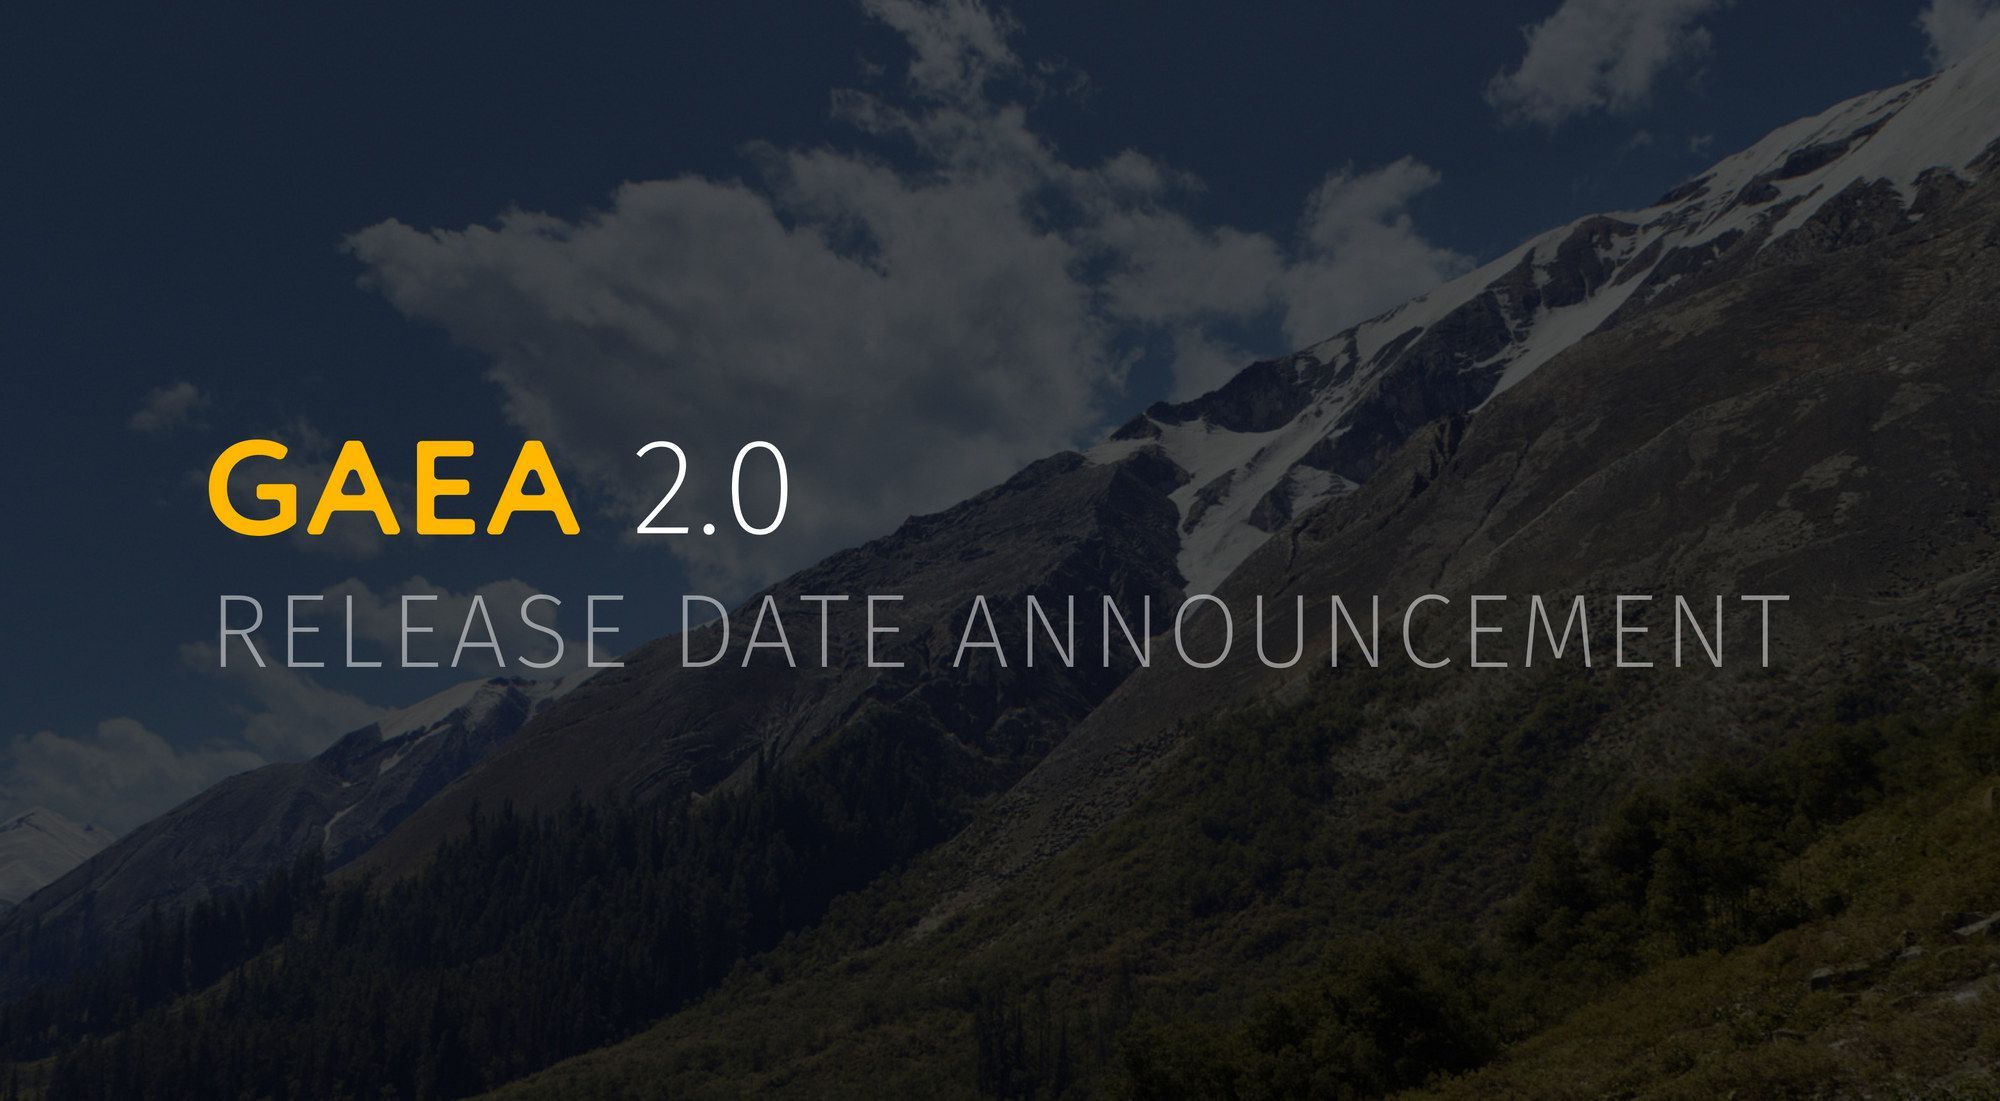 Gaea 2.0 - Release Date Announcement